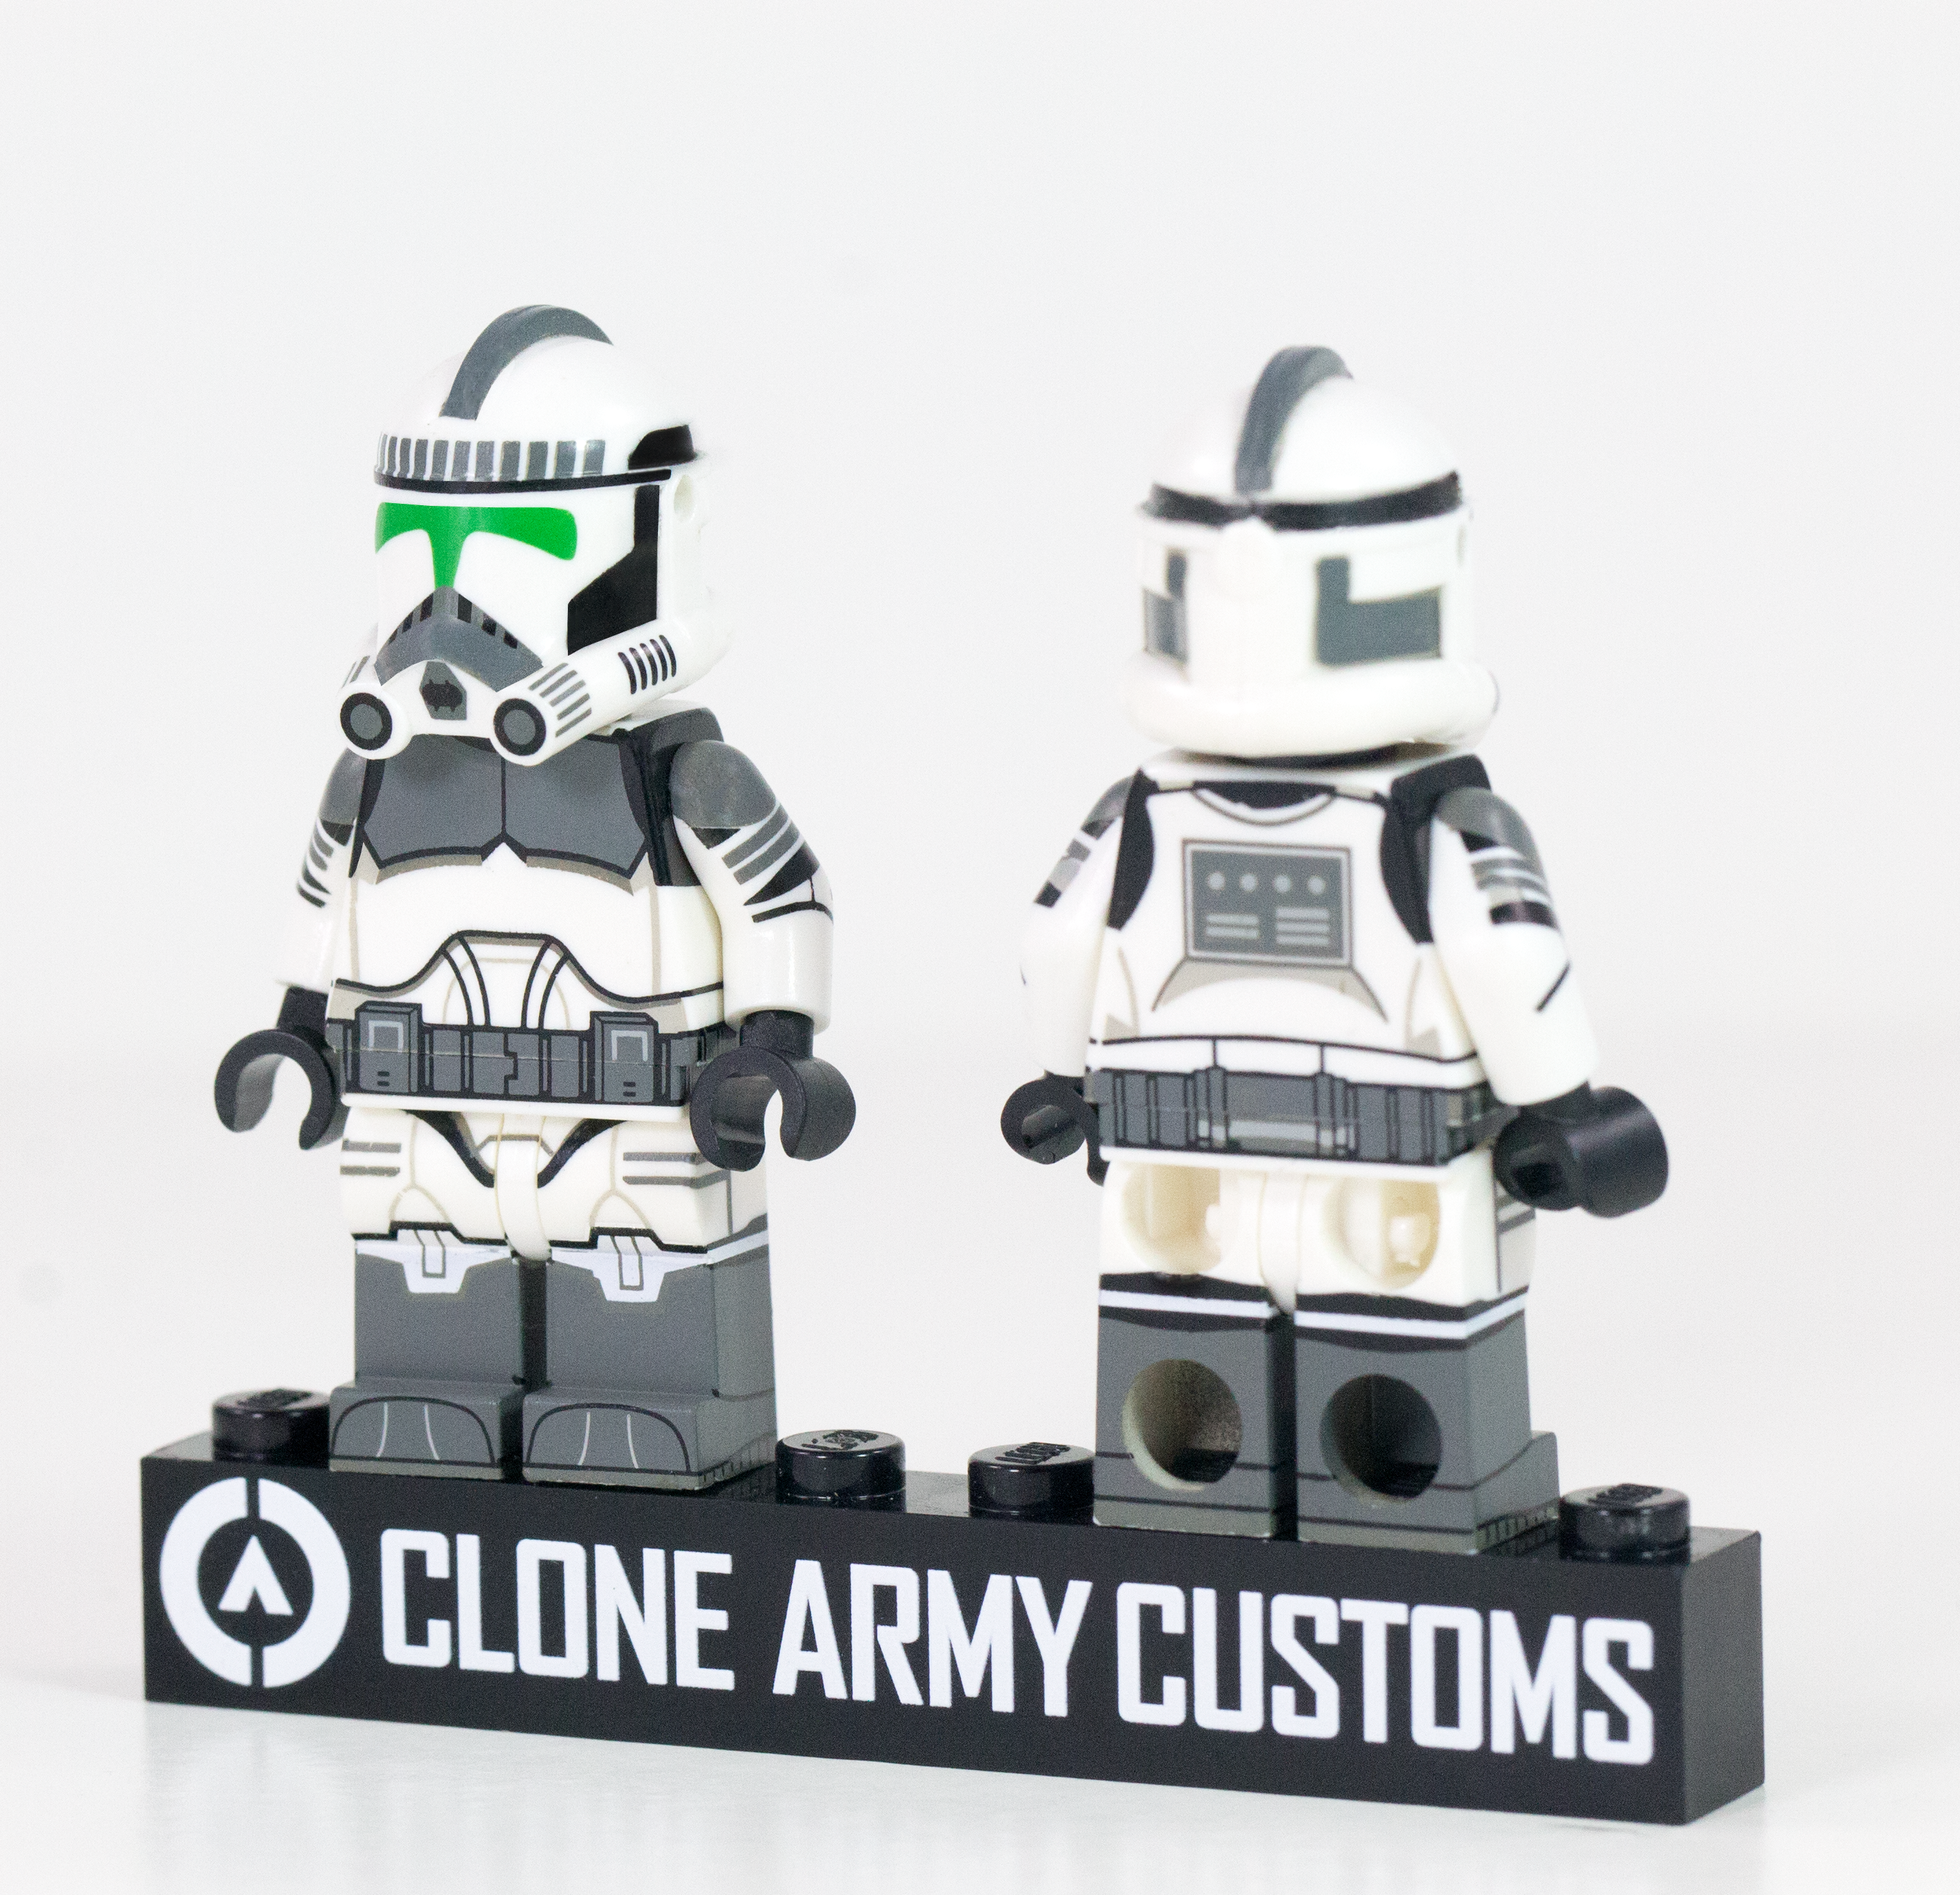 P2 Shock Gray Jet Trooper - Custom Star Wars Minifig made using LEGO bricks